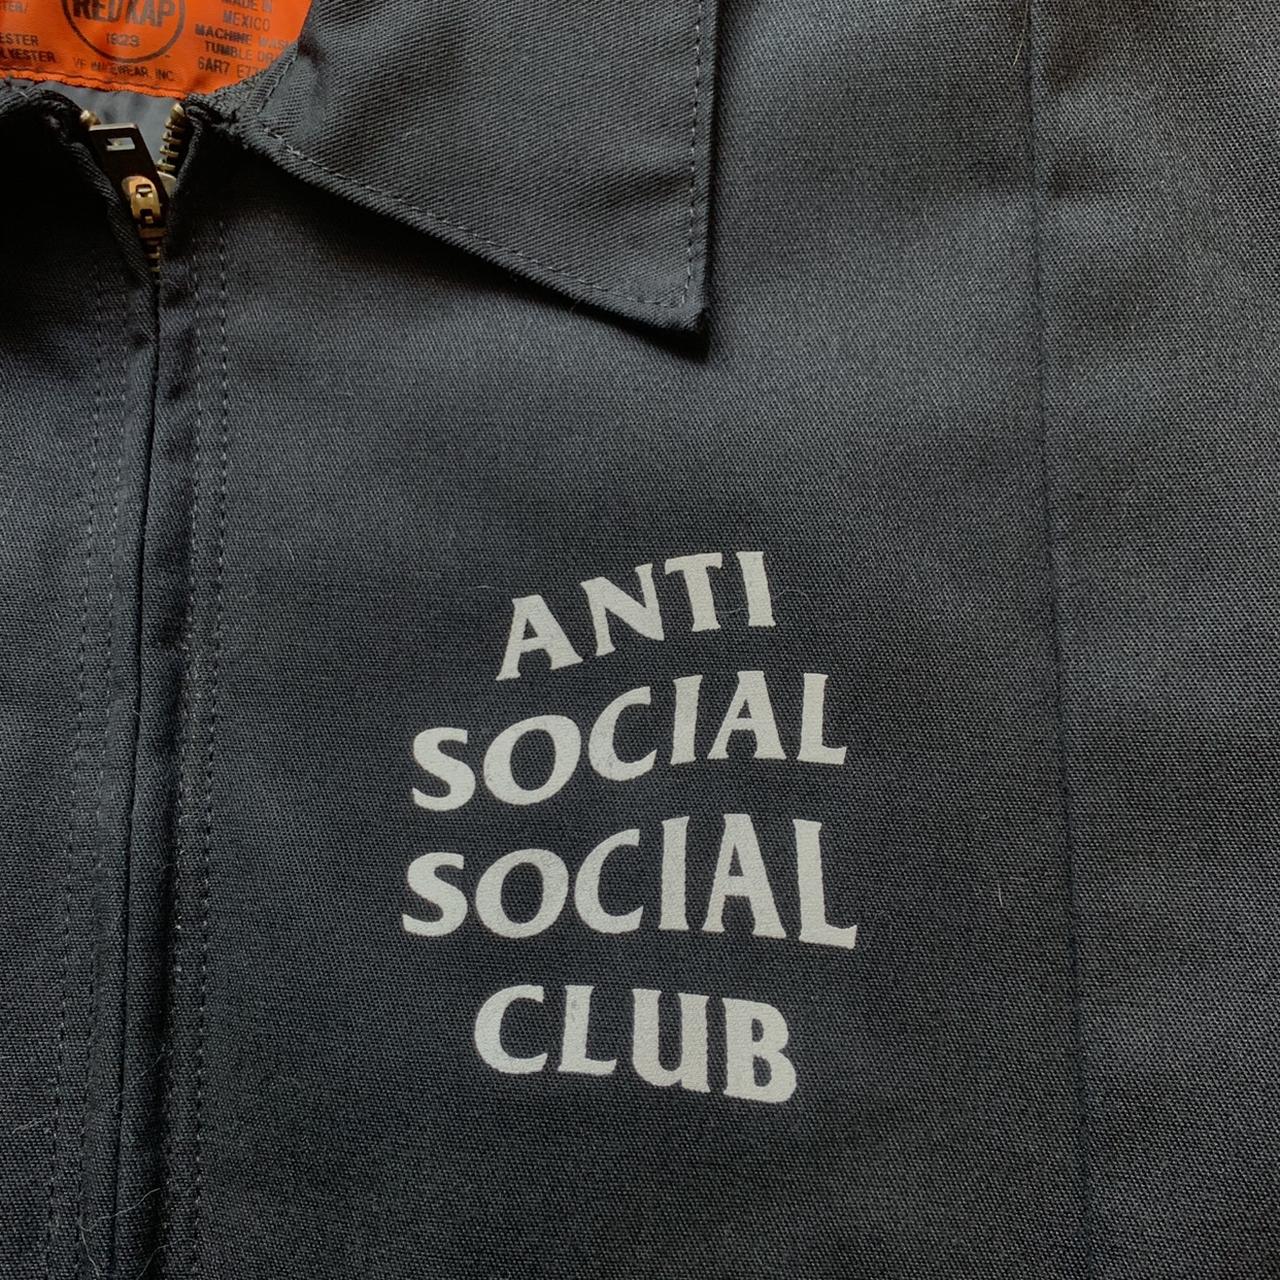 Anti Social Social Club Red Kap Jacket Usually Goes... - Depop